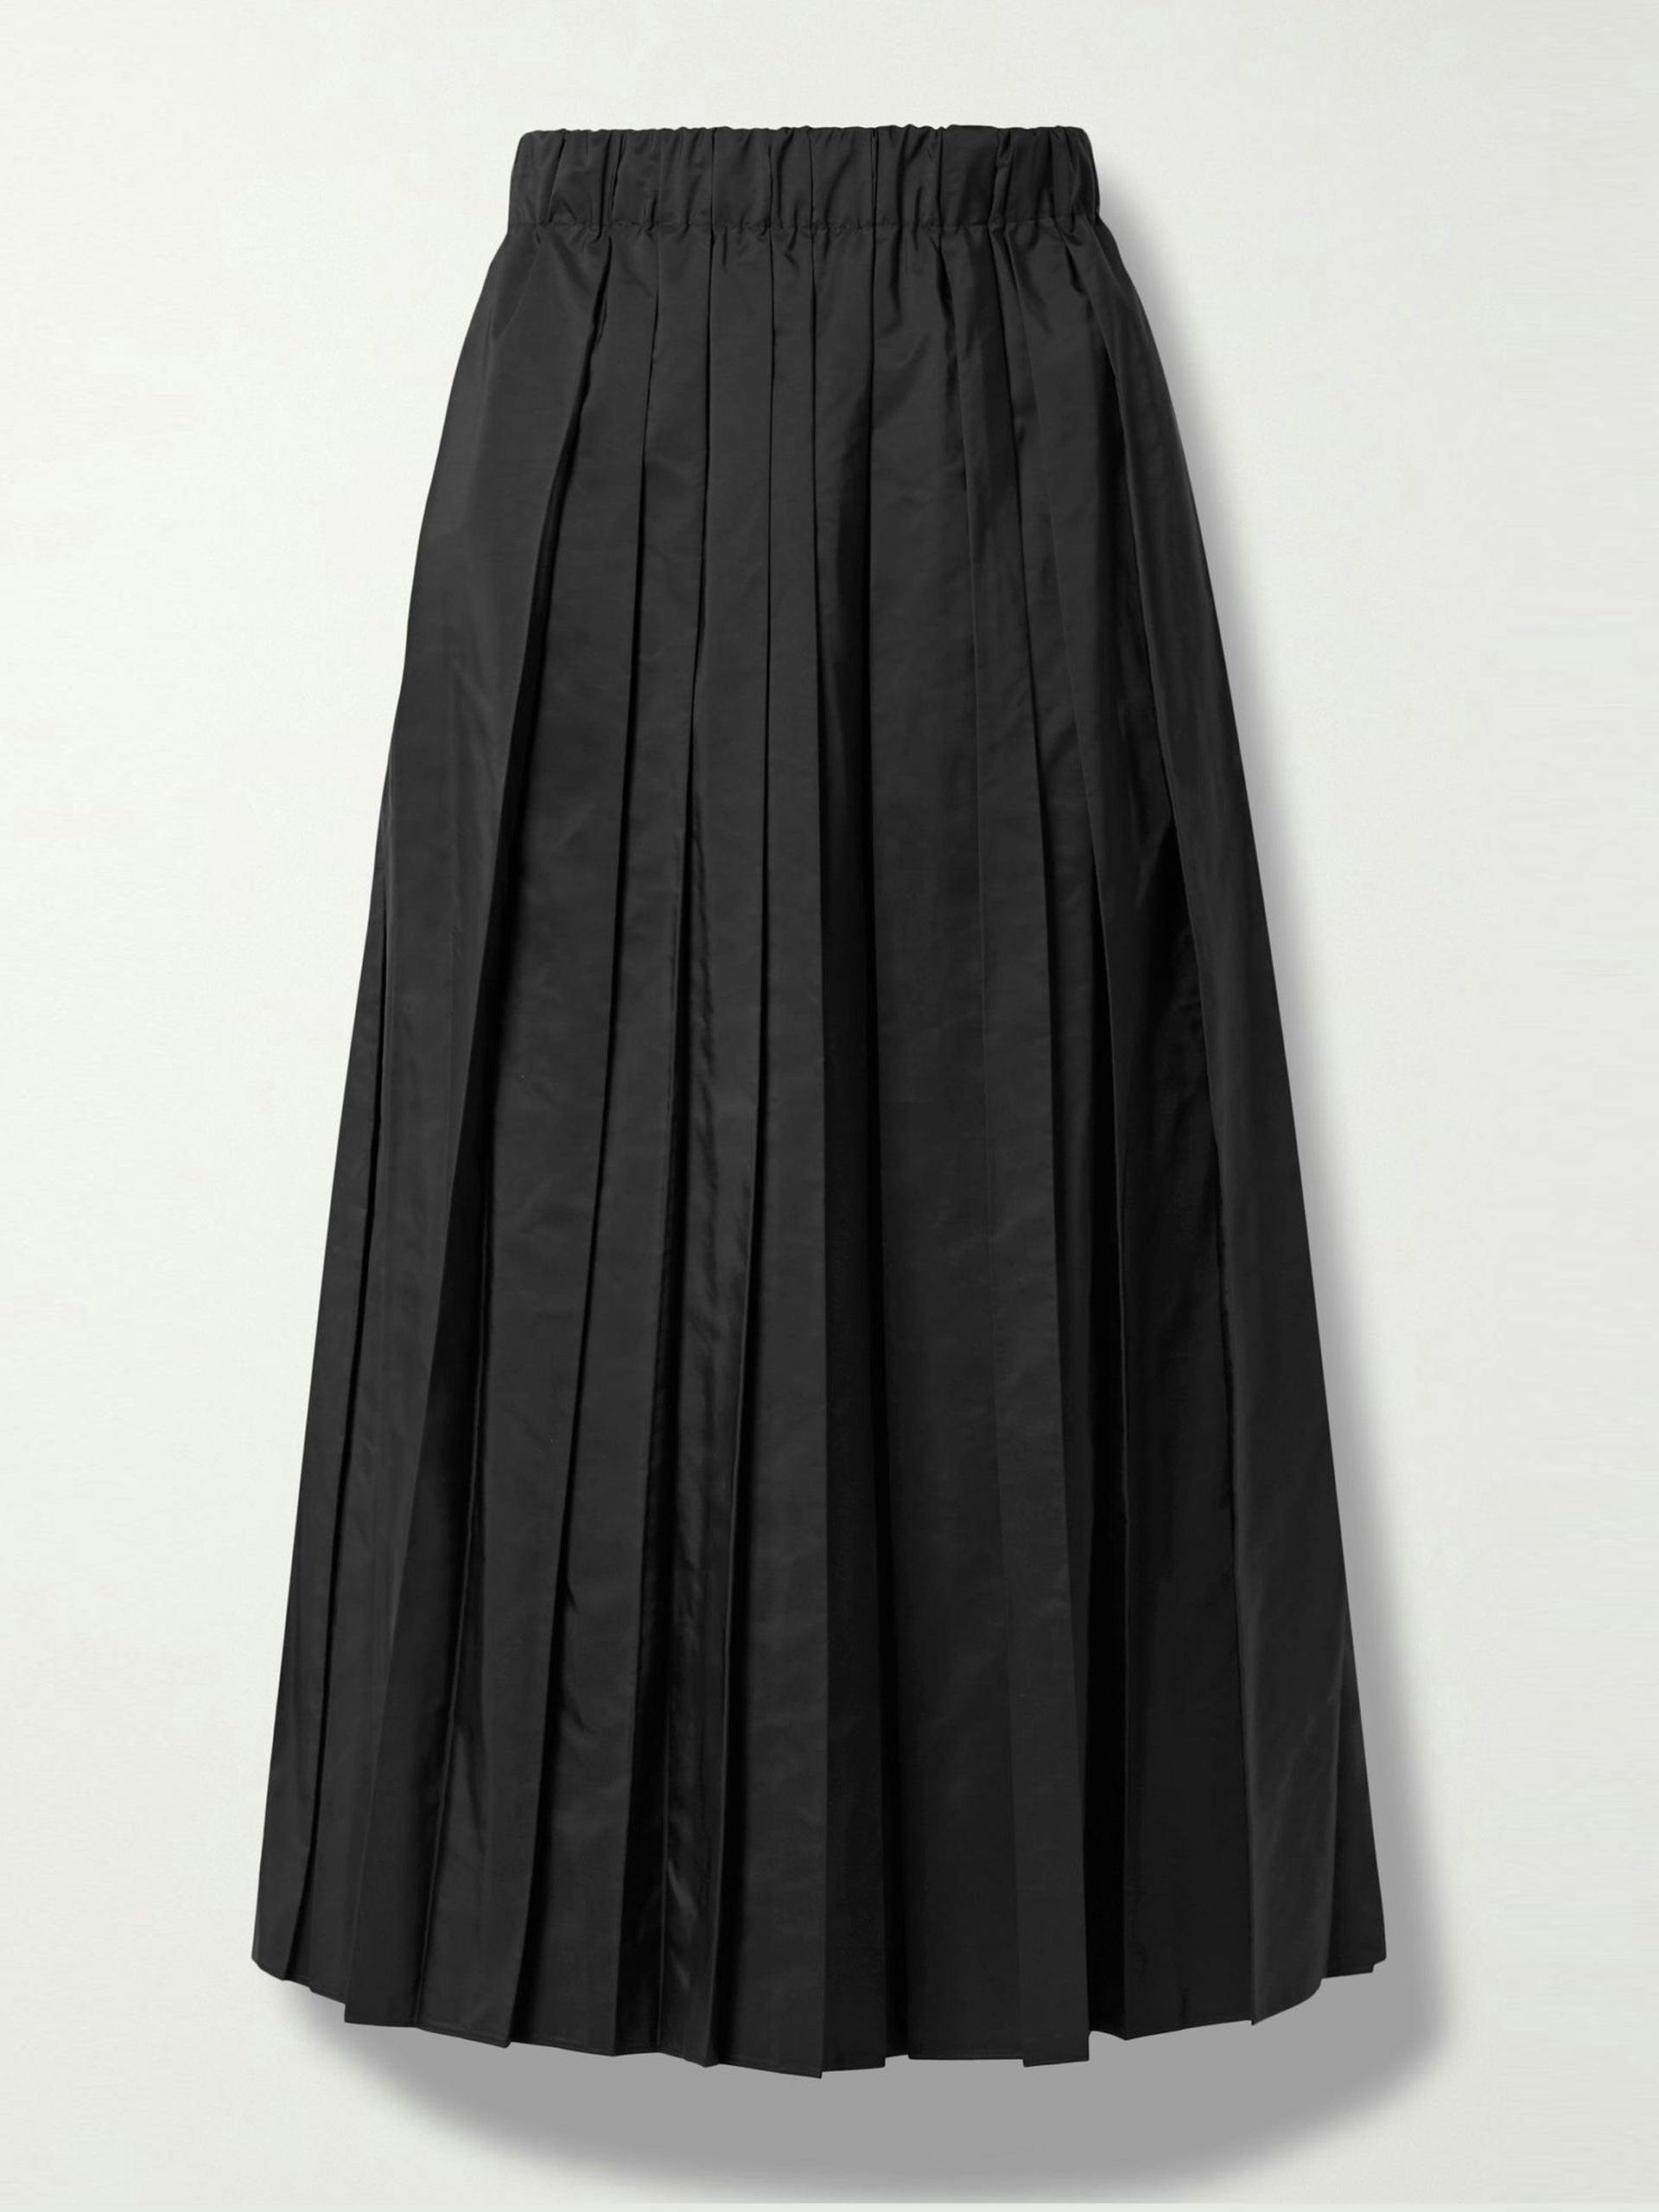 Black nylon maxi skirt